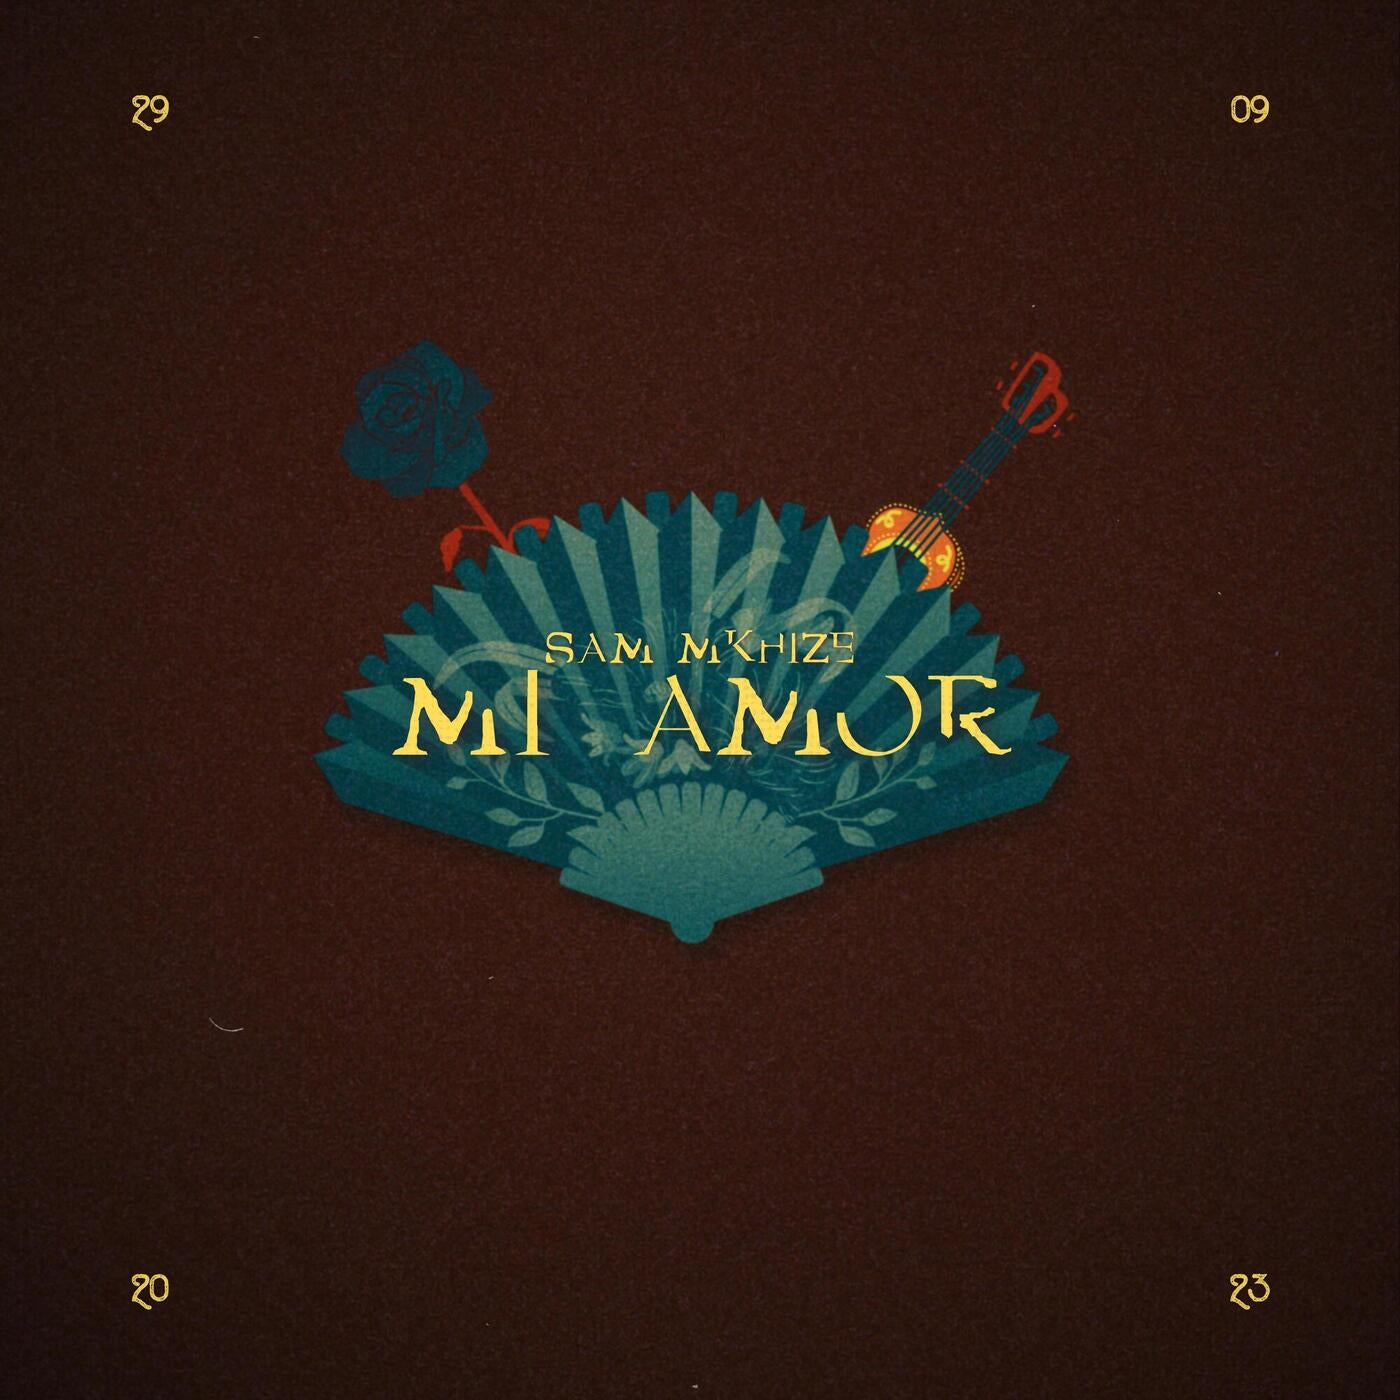 Mi Amor (Extended Version)